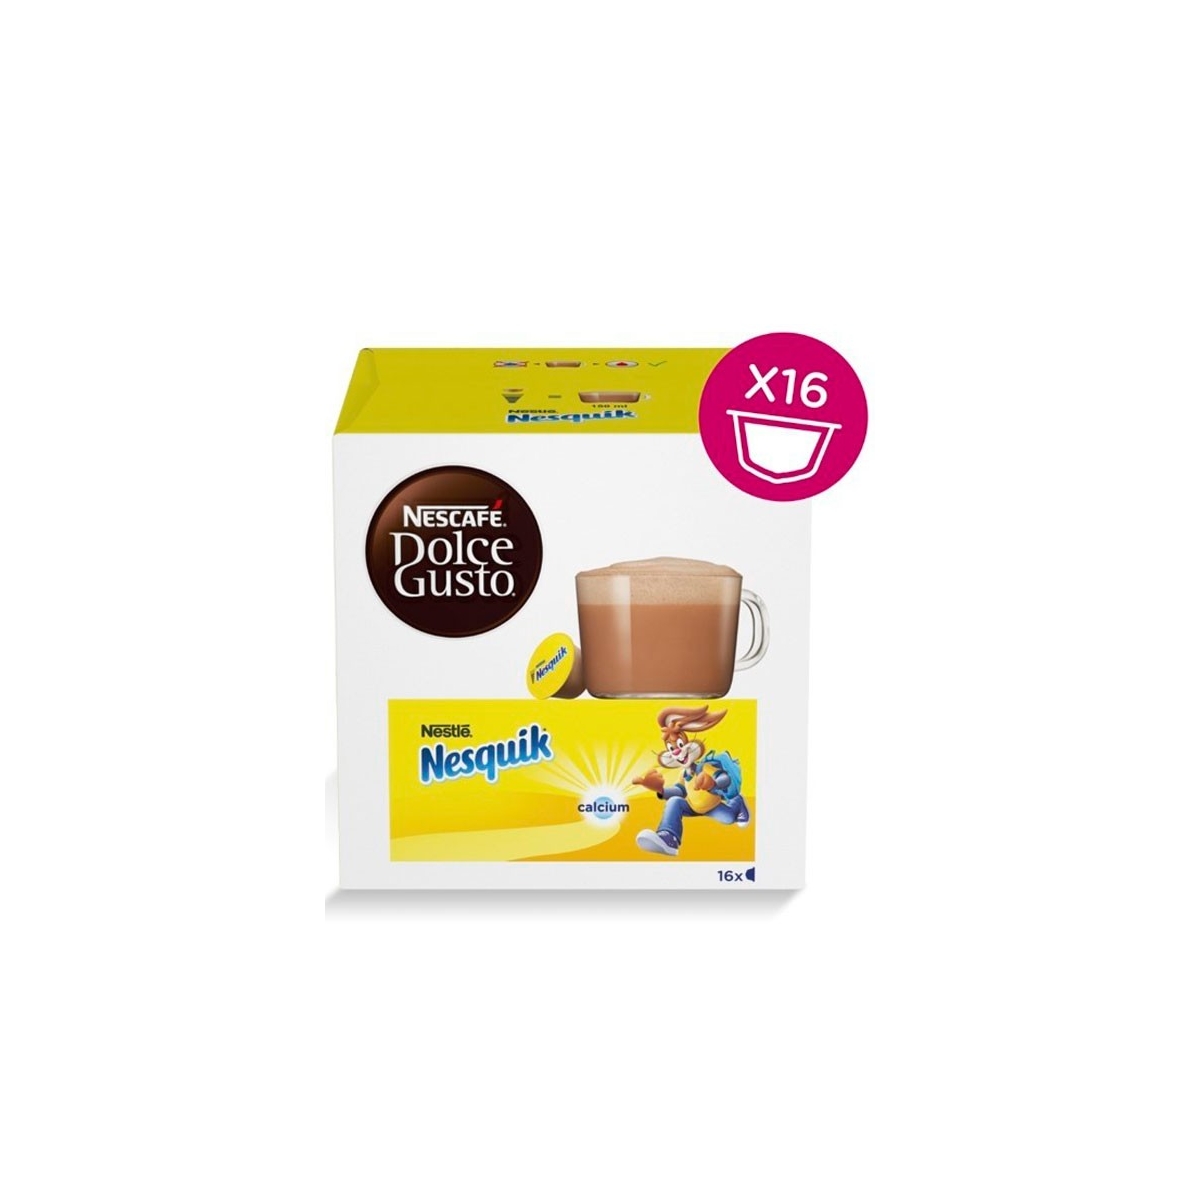 Nestlé releases Nesquik pods for the Nescafé Dolce Gusto system